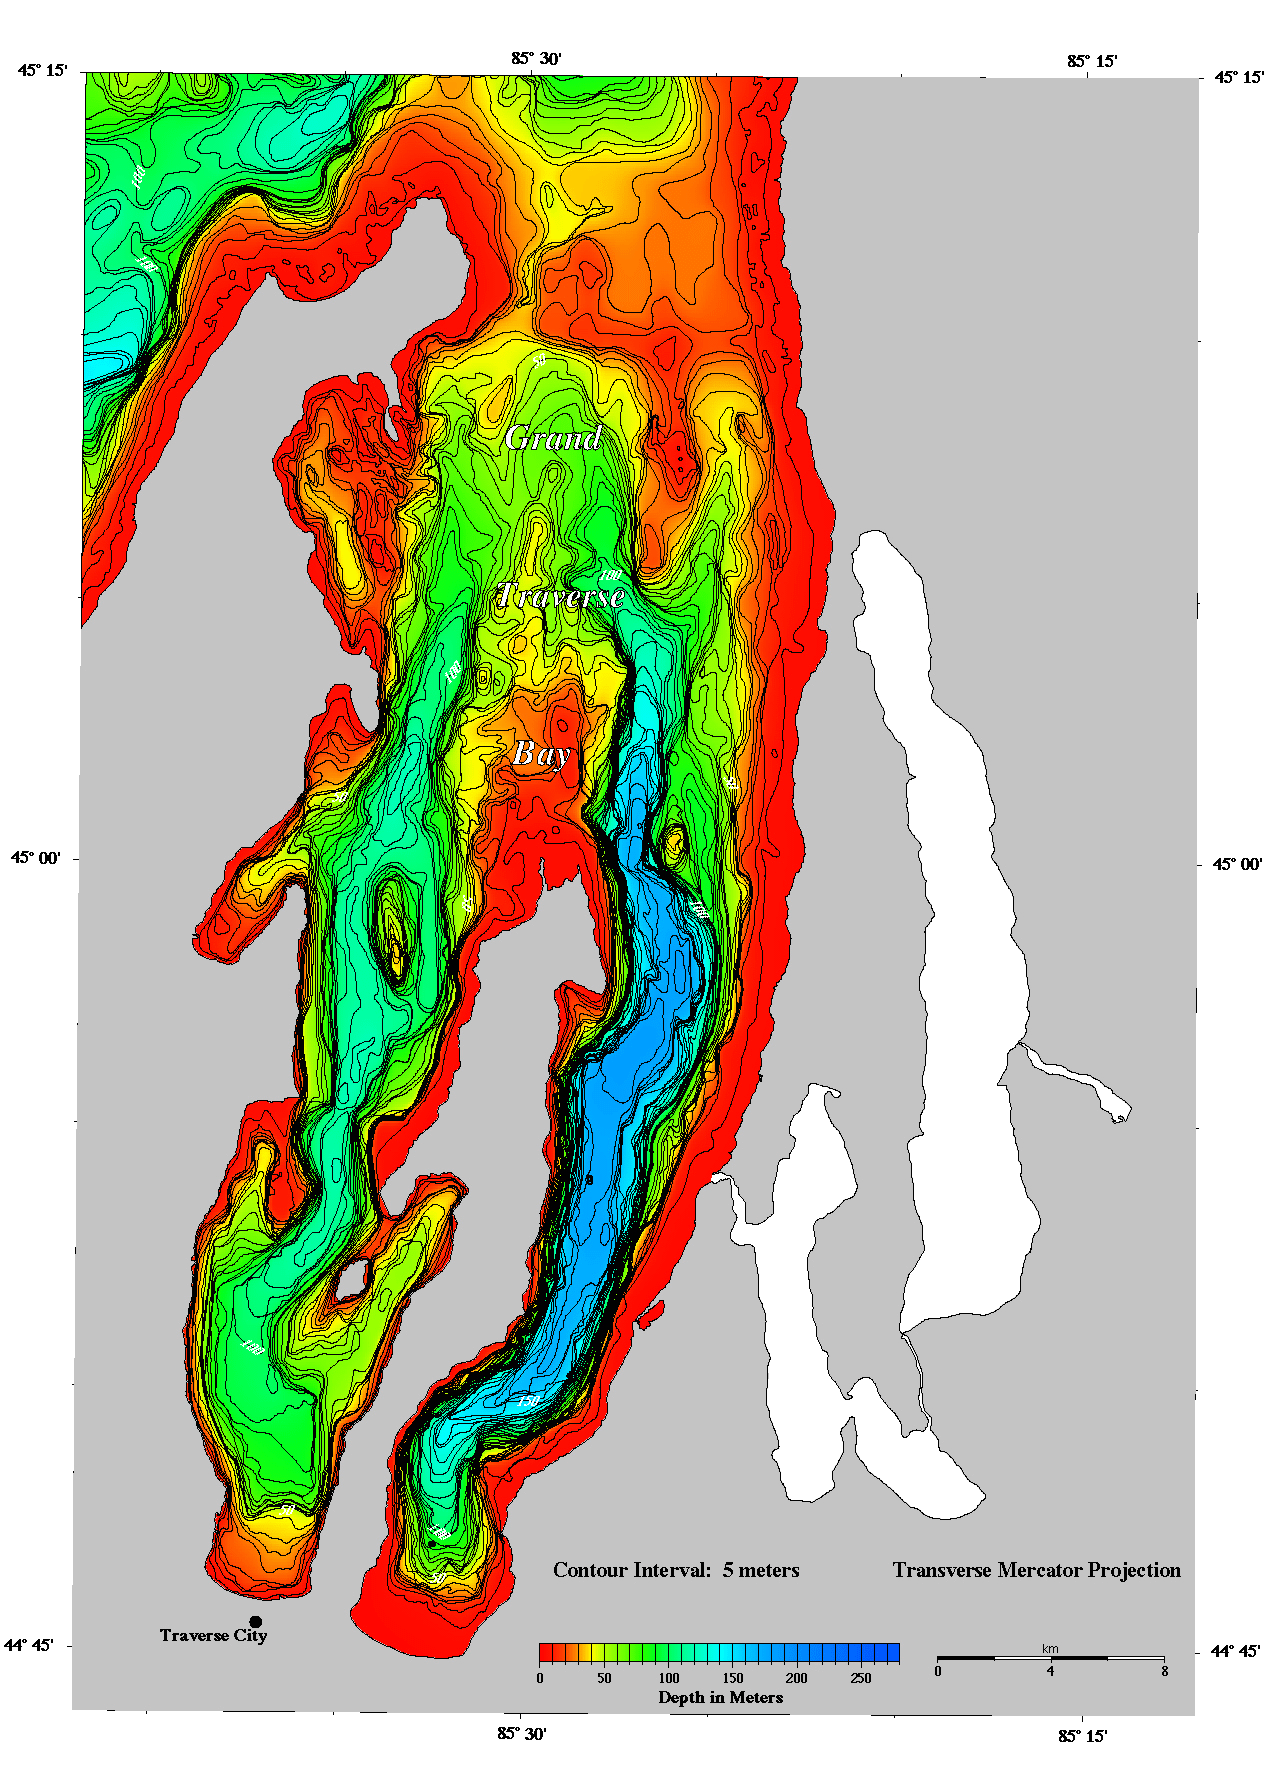 West Grand Traverse Bay Depth Chart